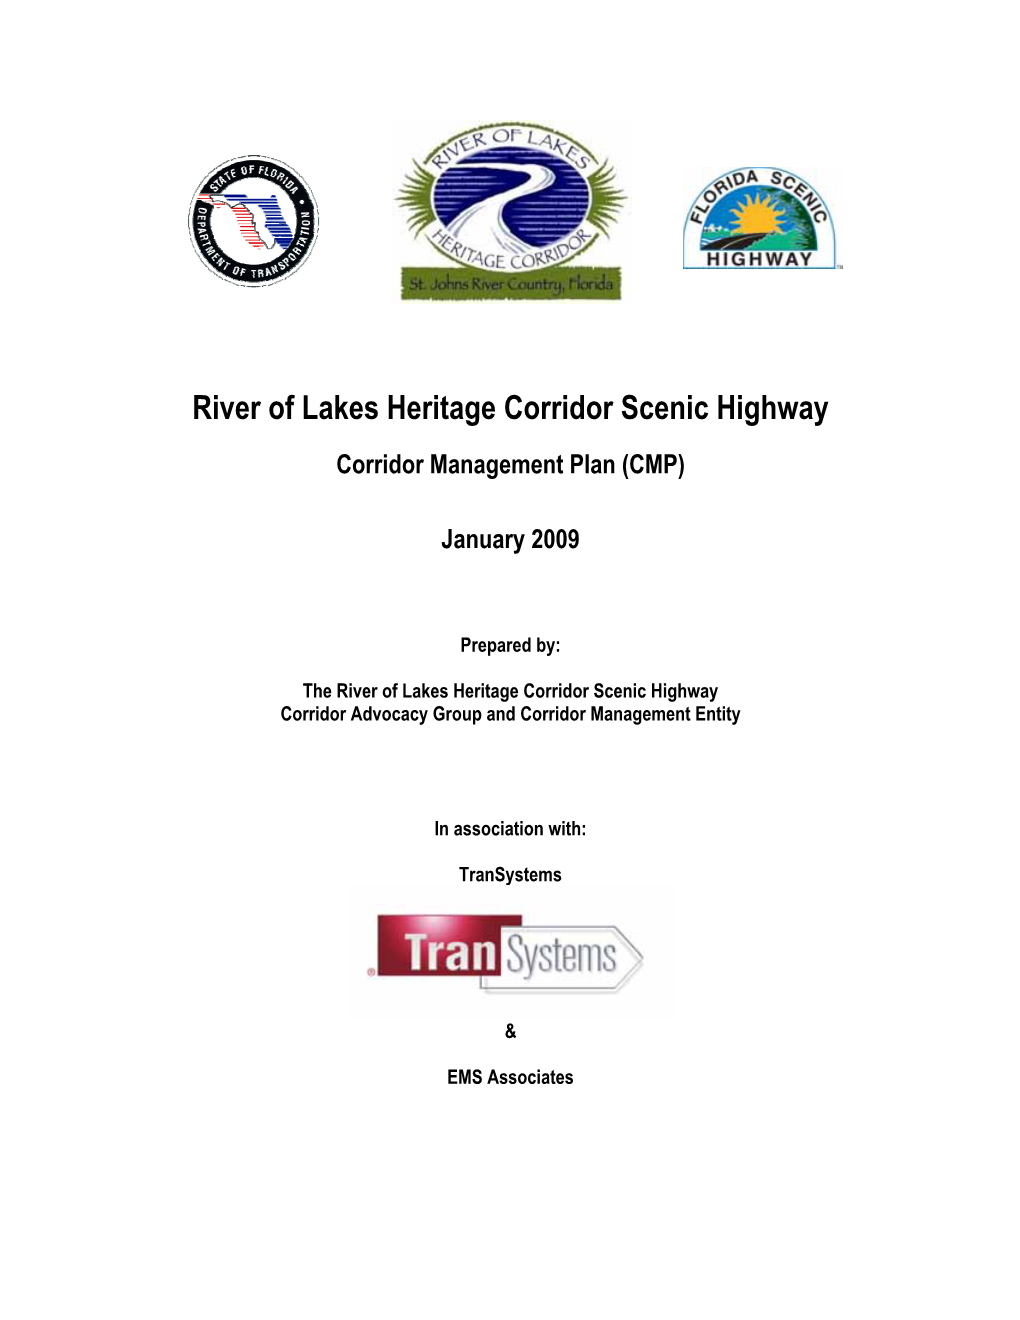 River of Lakes Heritage Corridor Scenic Highway Corridor Management Plan (CMP)